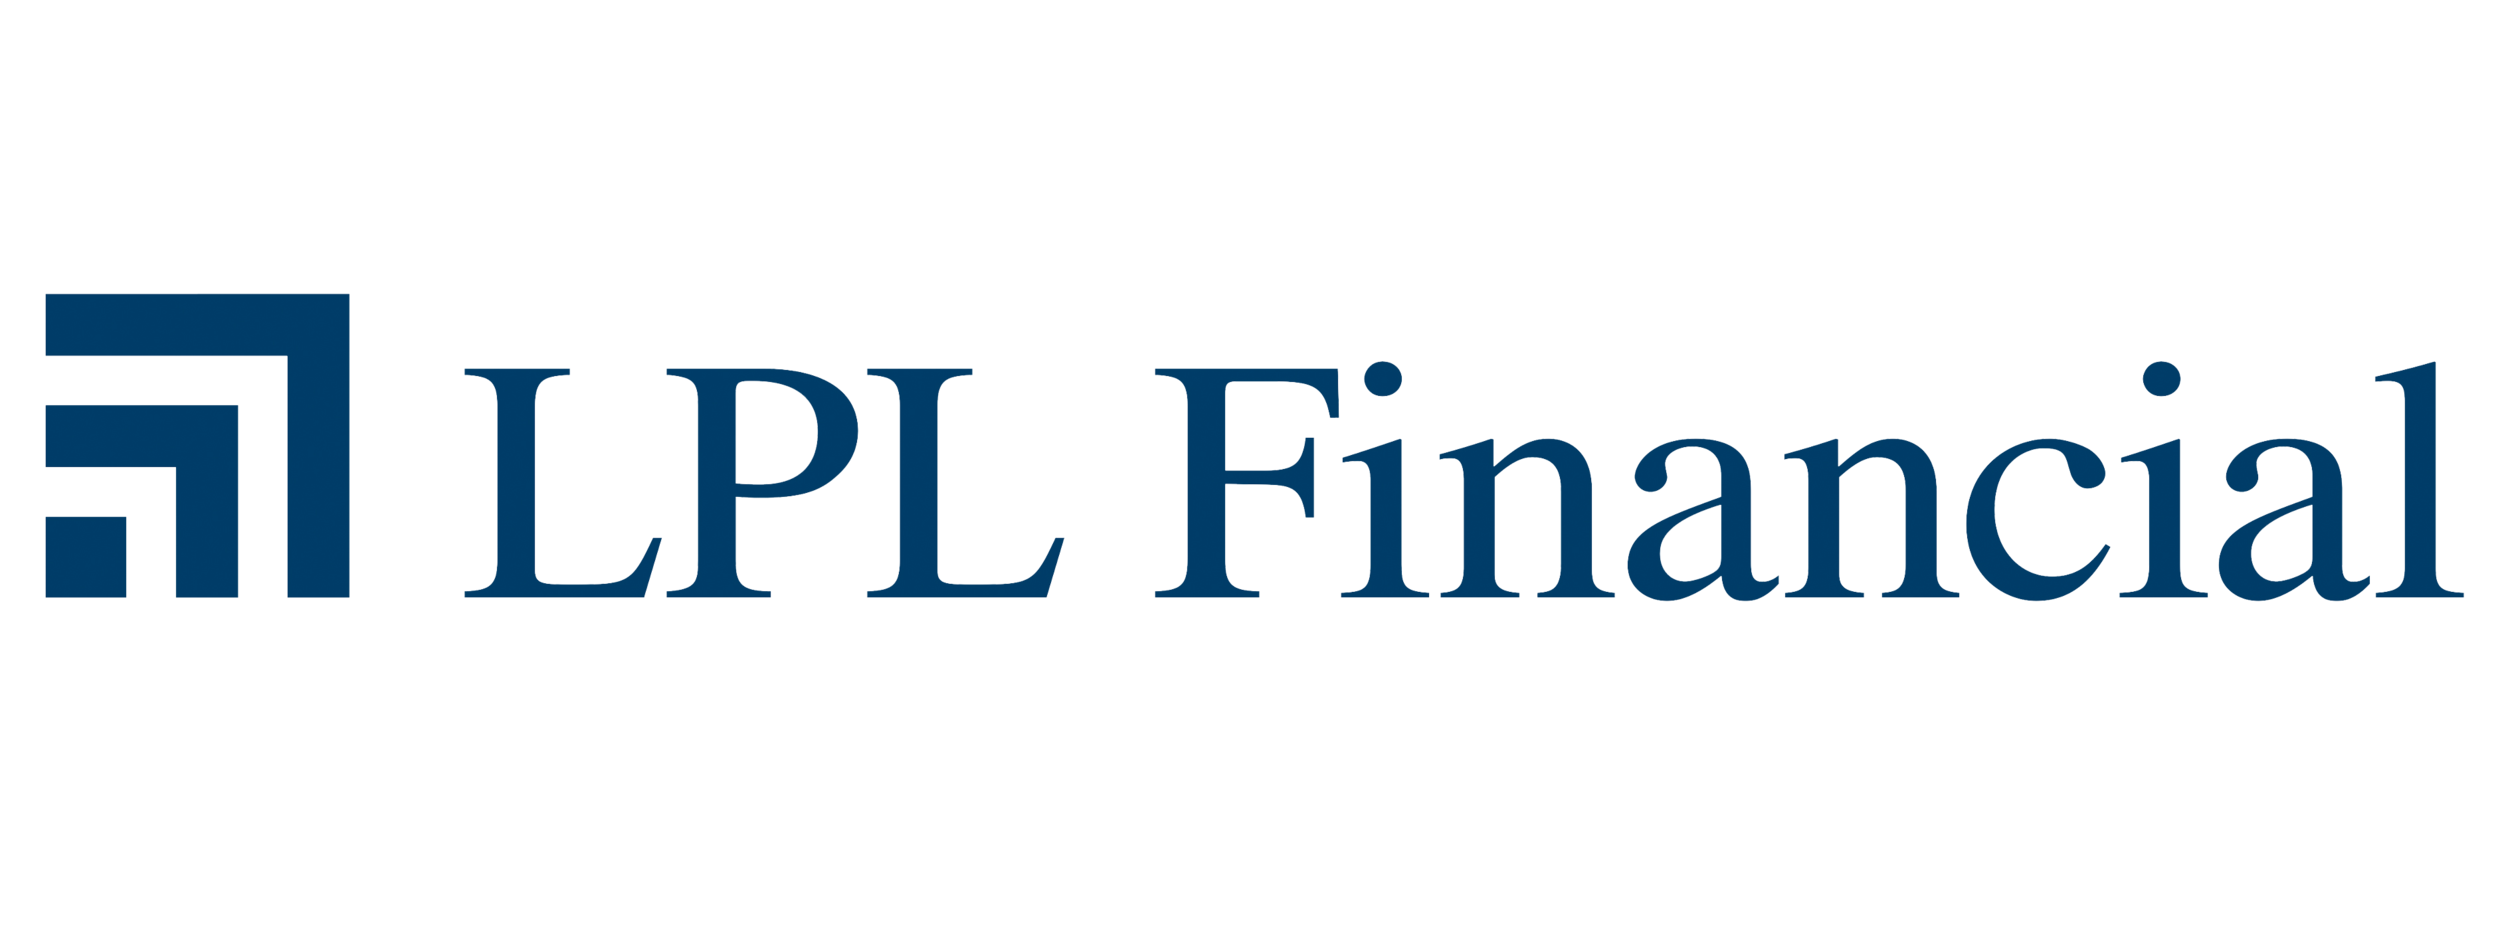 LPL Financial